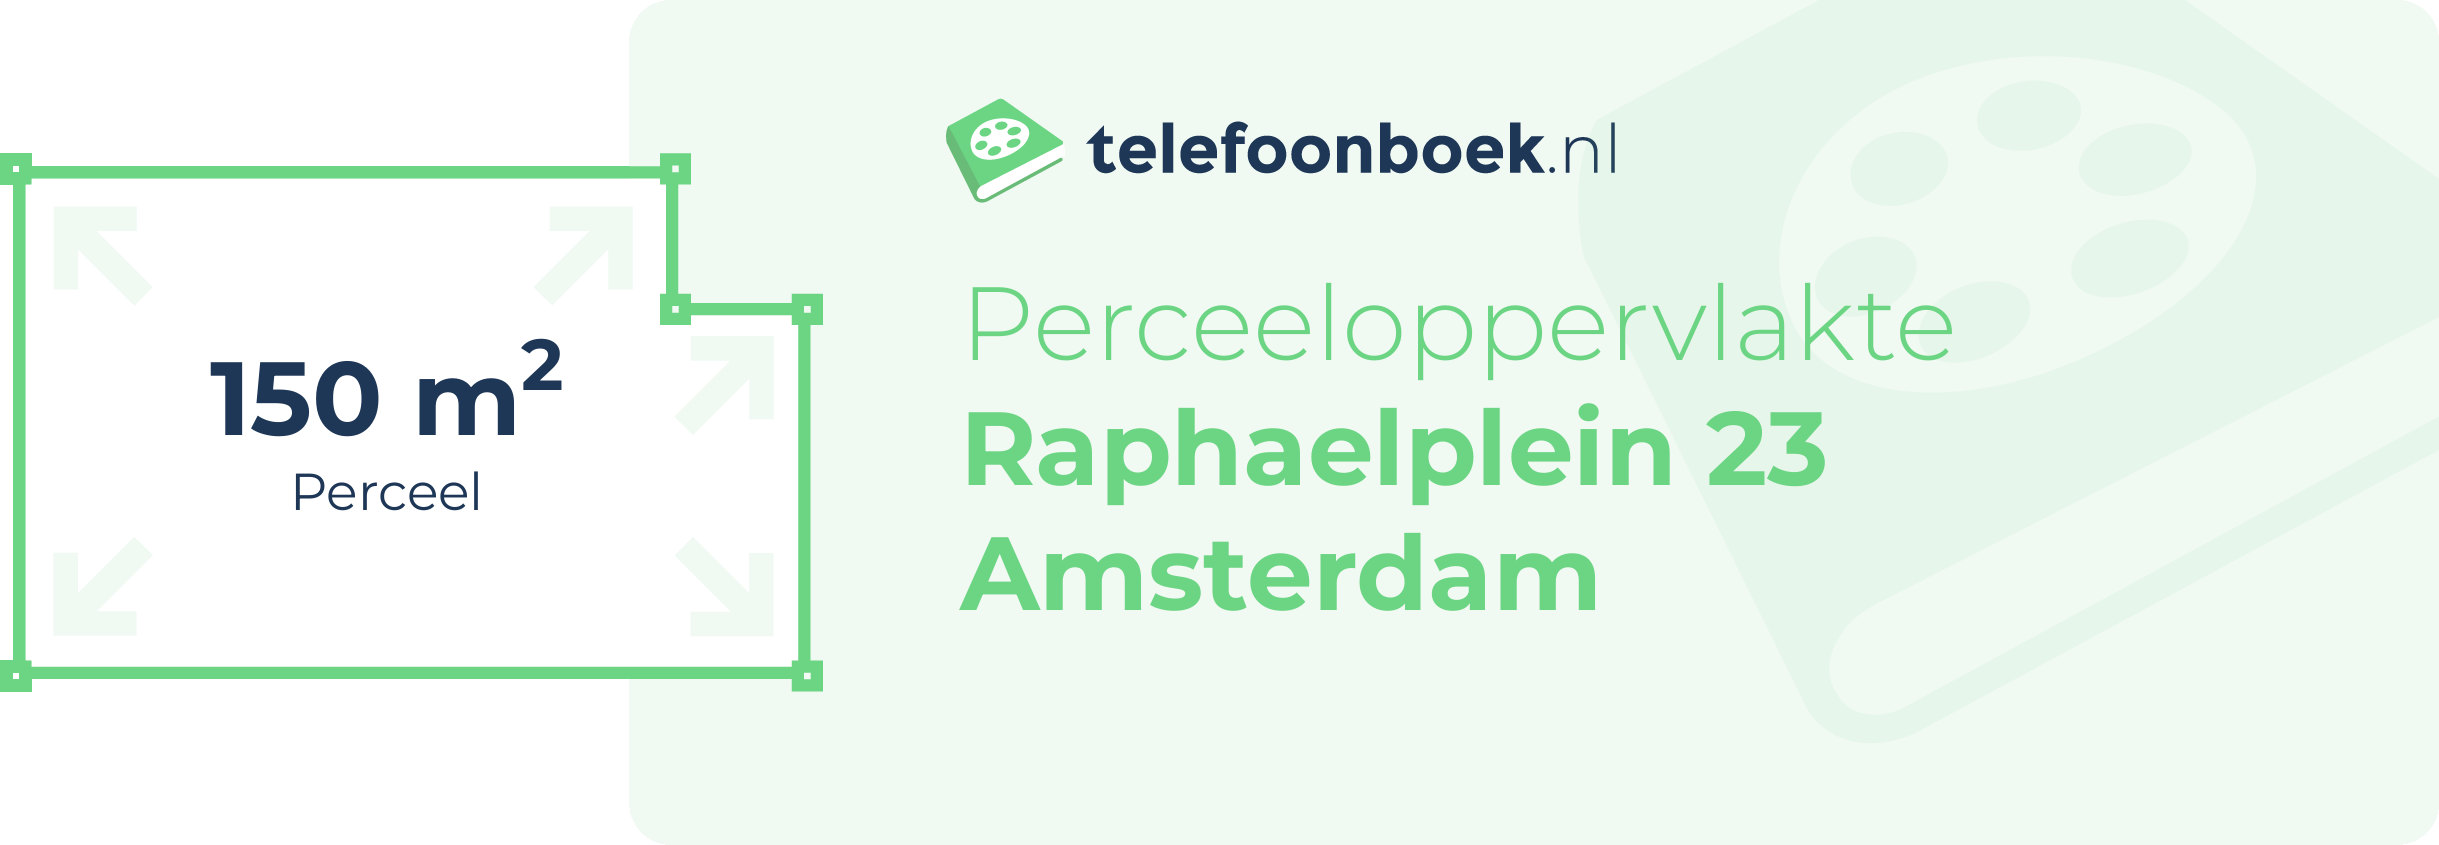 Perceeloppervlakte Raphaelplein 23 Amsterdam